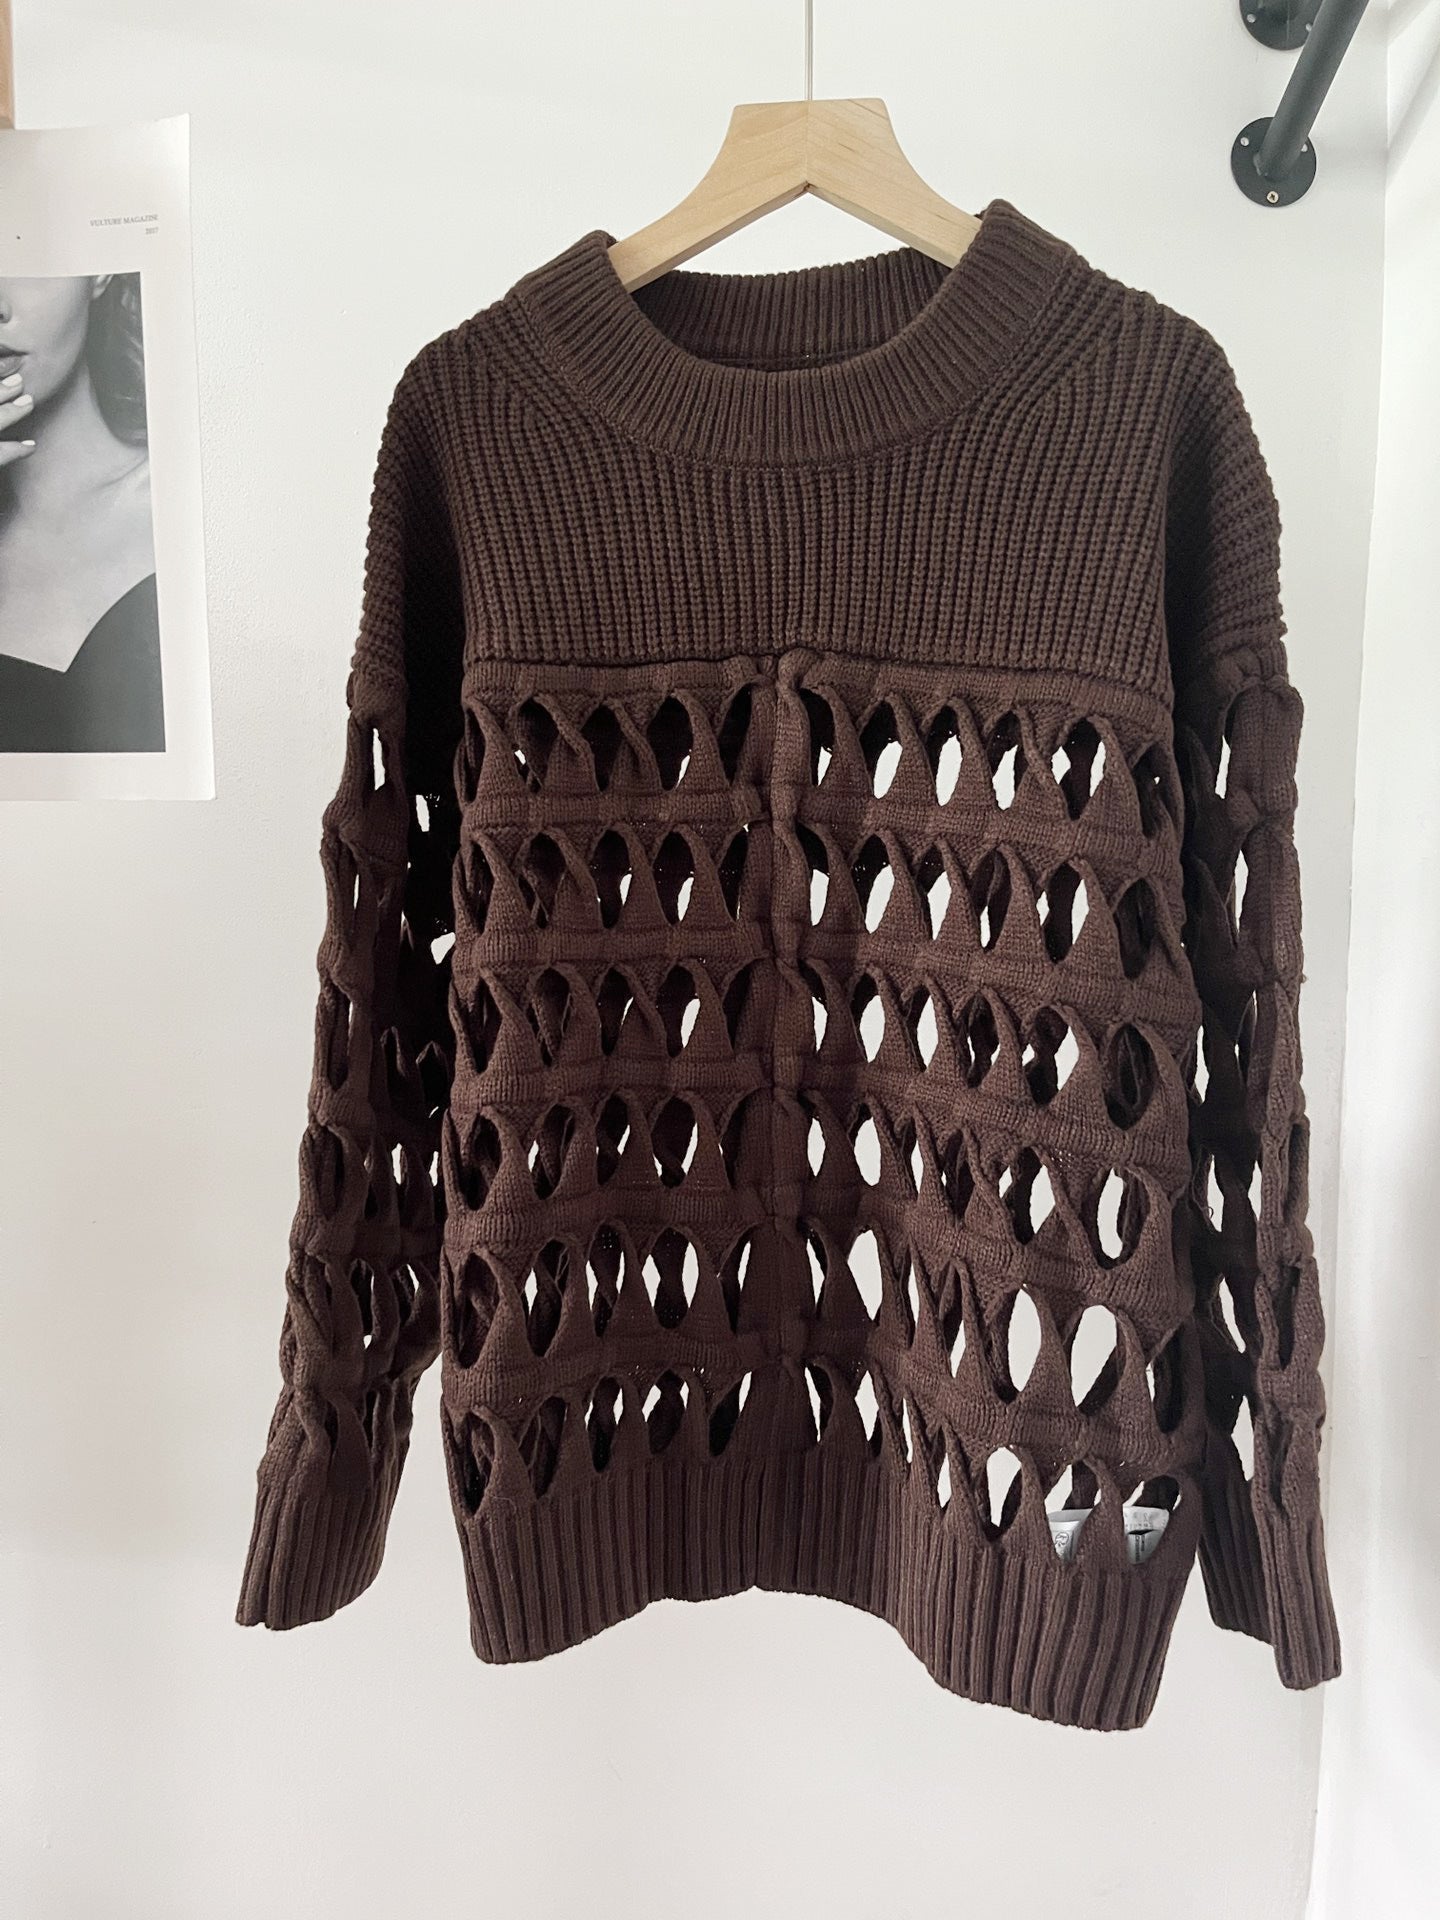 Chocolate Open Knit Cotton Sweater - Kelly Obi New York